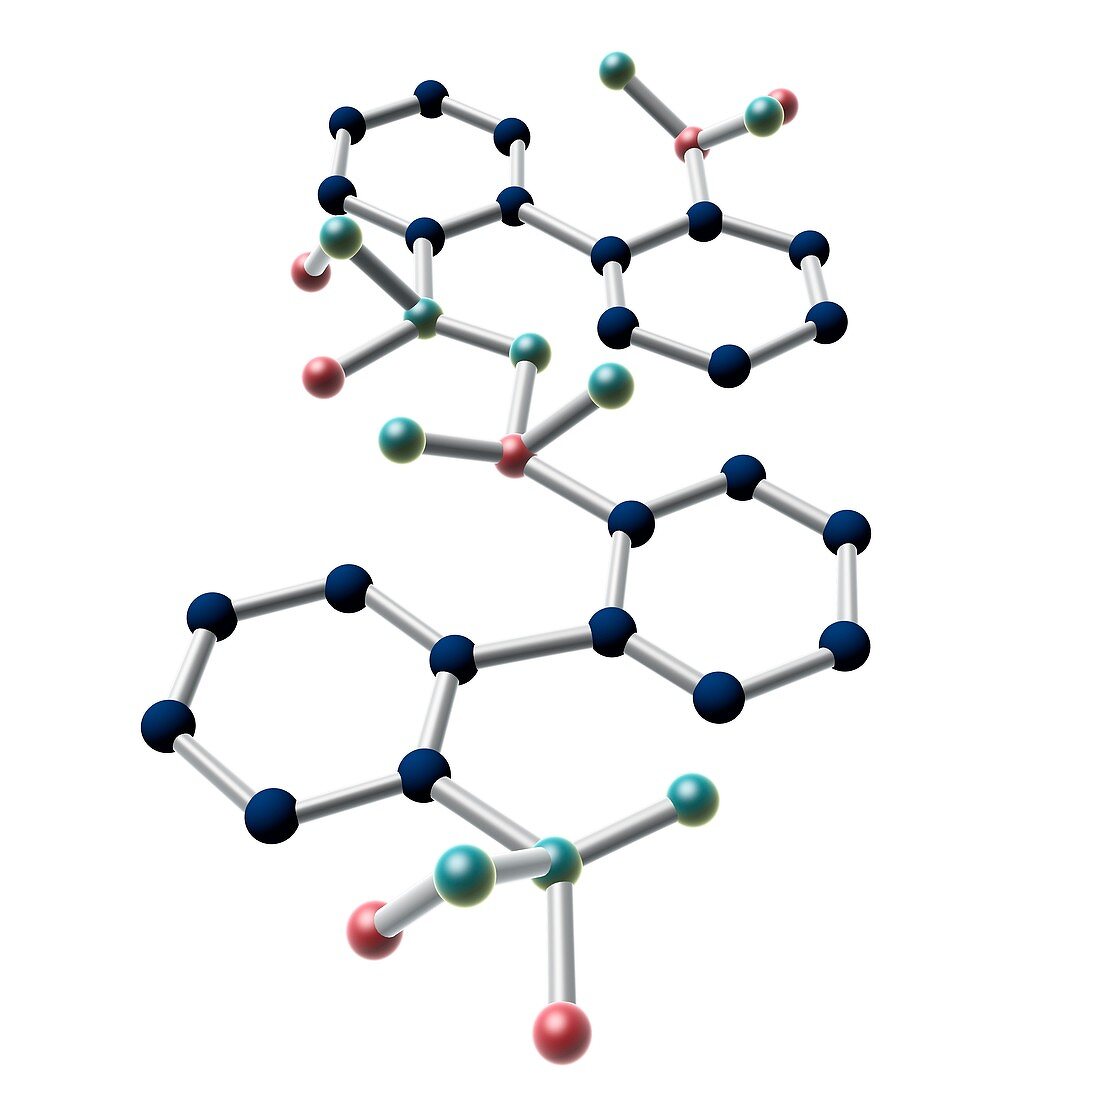 Benznidazole antiparasitic drug, molecular model